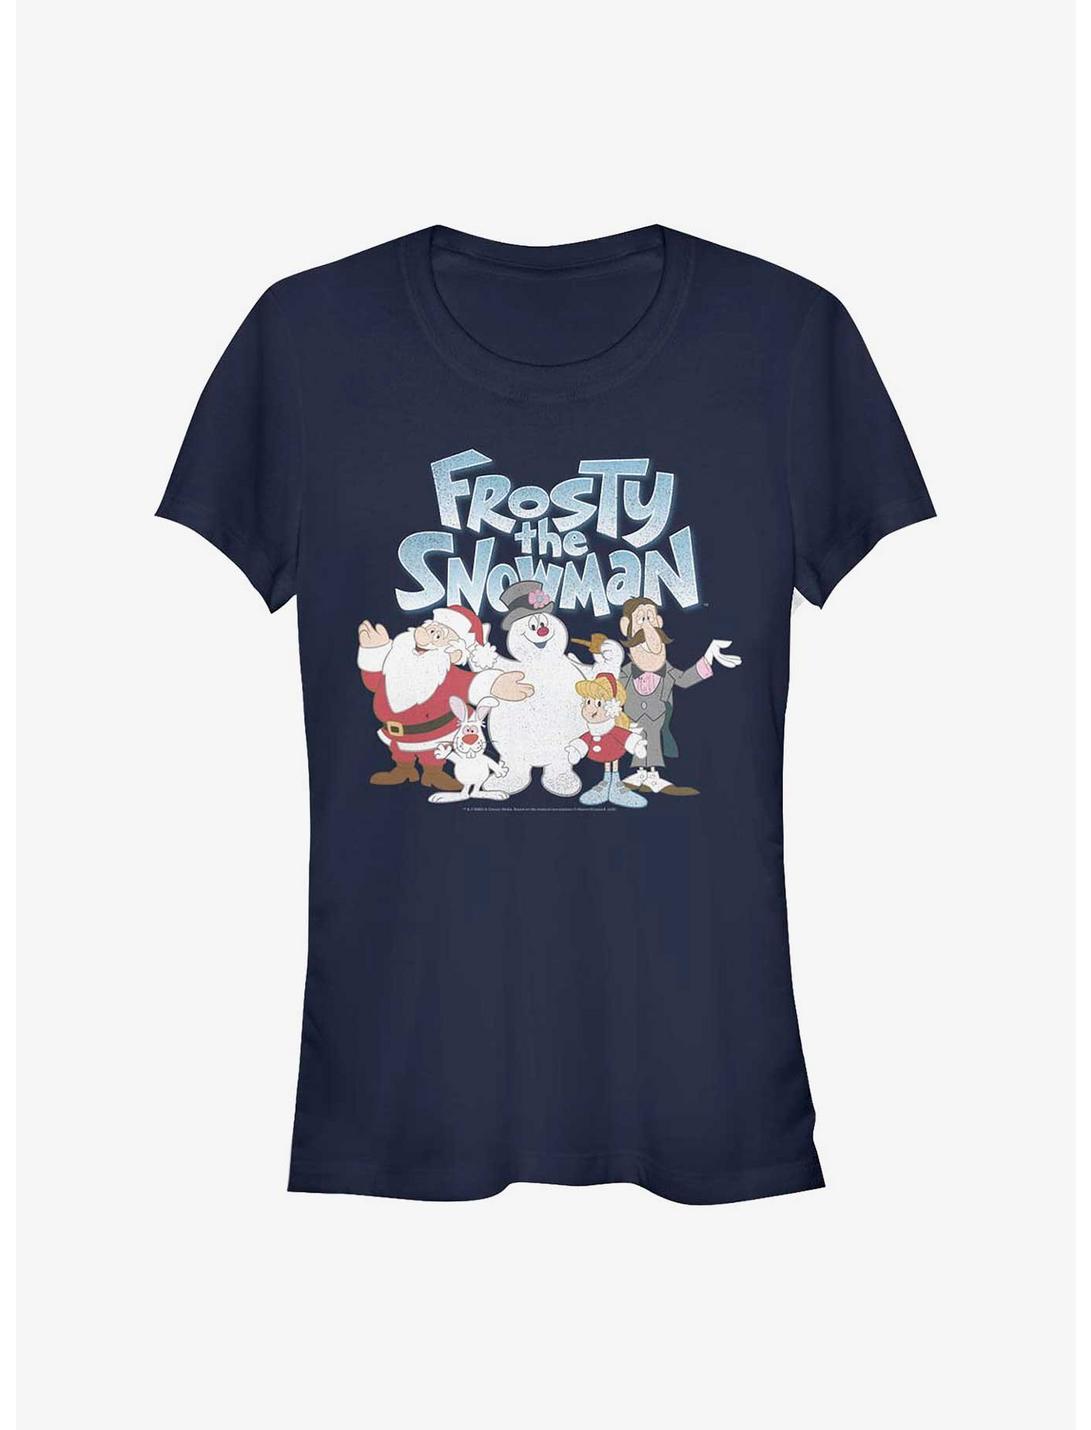 Frosty The Snowman Group Shot Girls T-Shirt, NAVY, hi-res